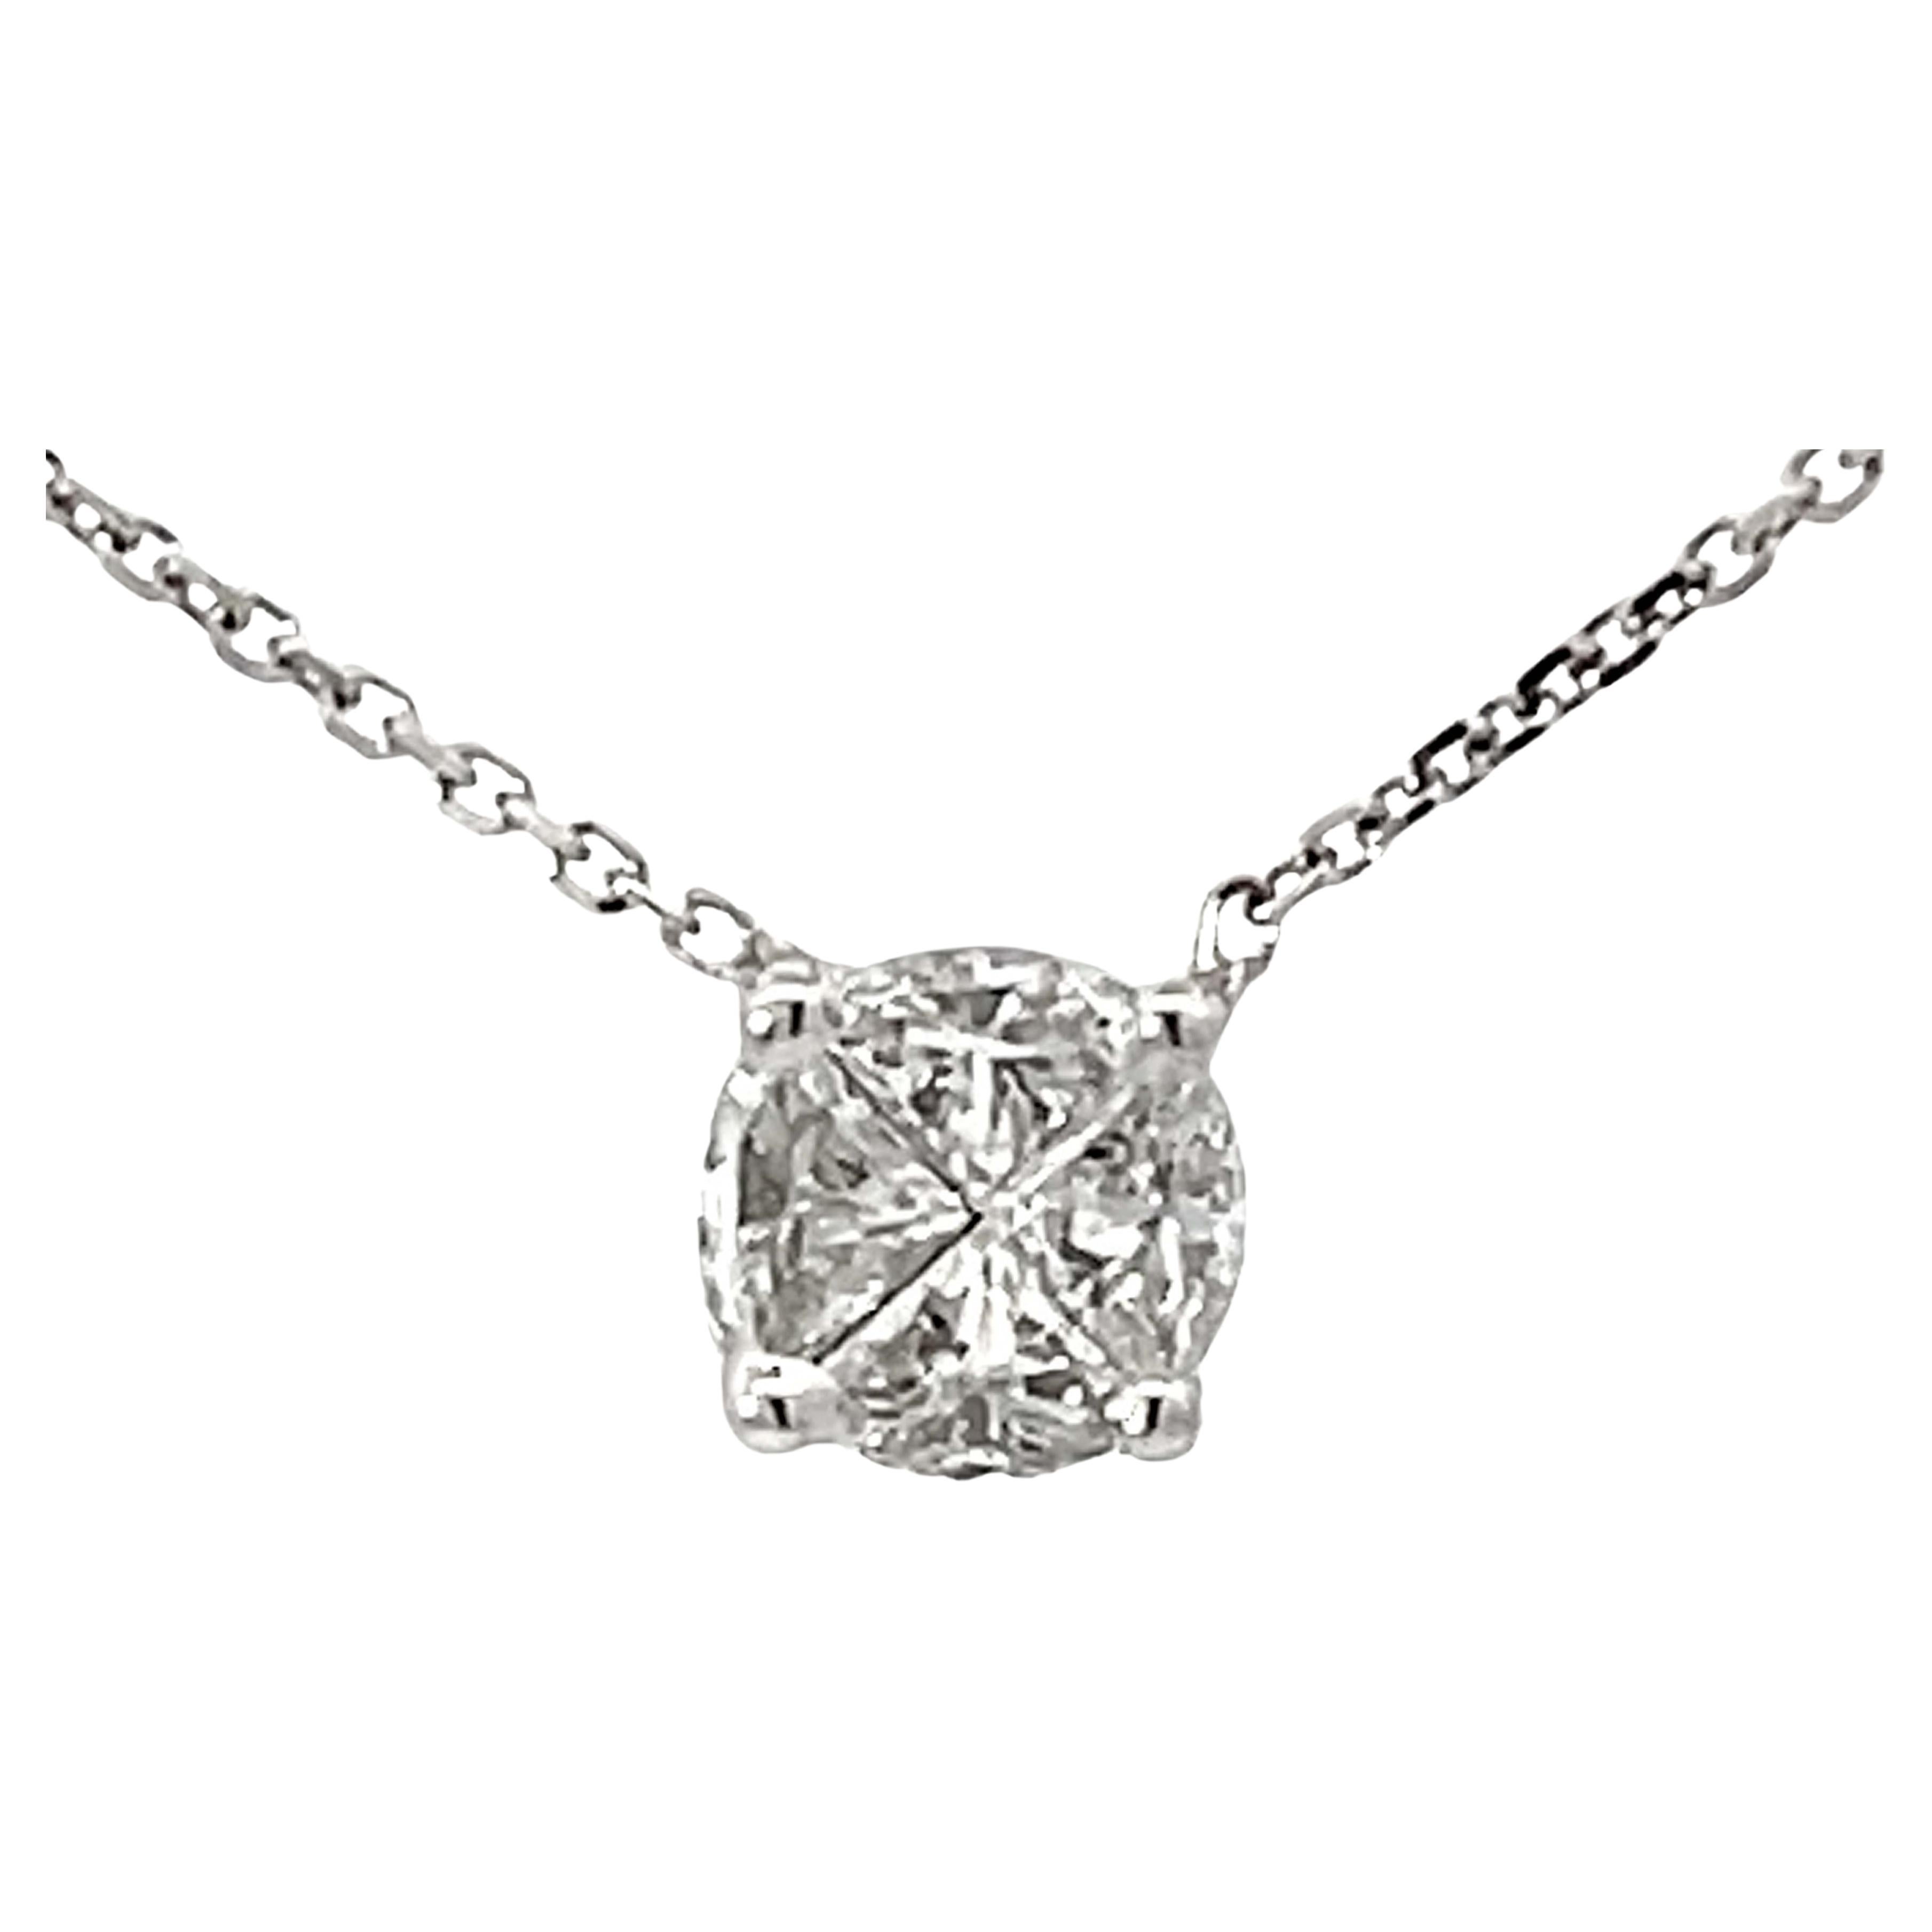 Piecut Diamond Necklace Solid 18k White Gold